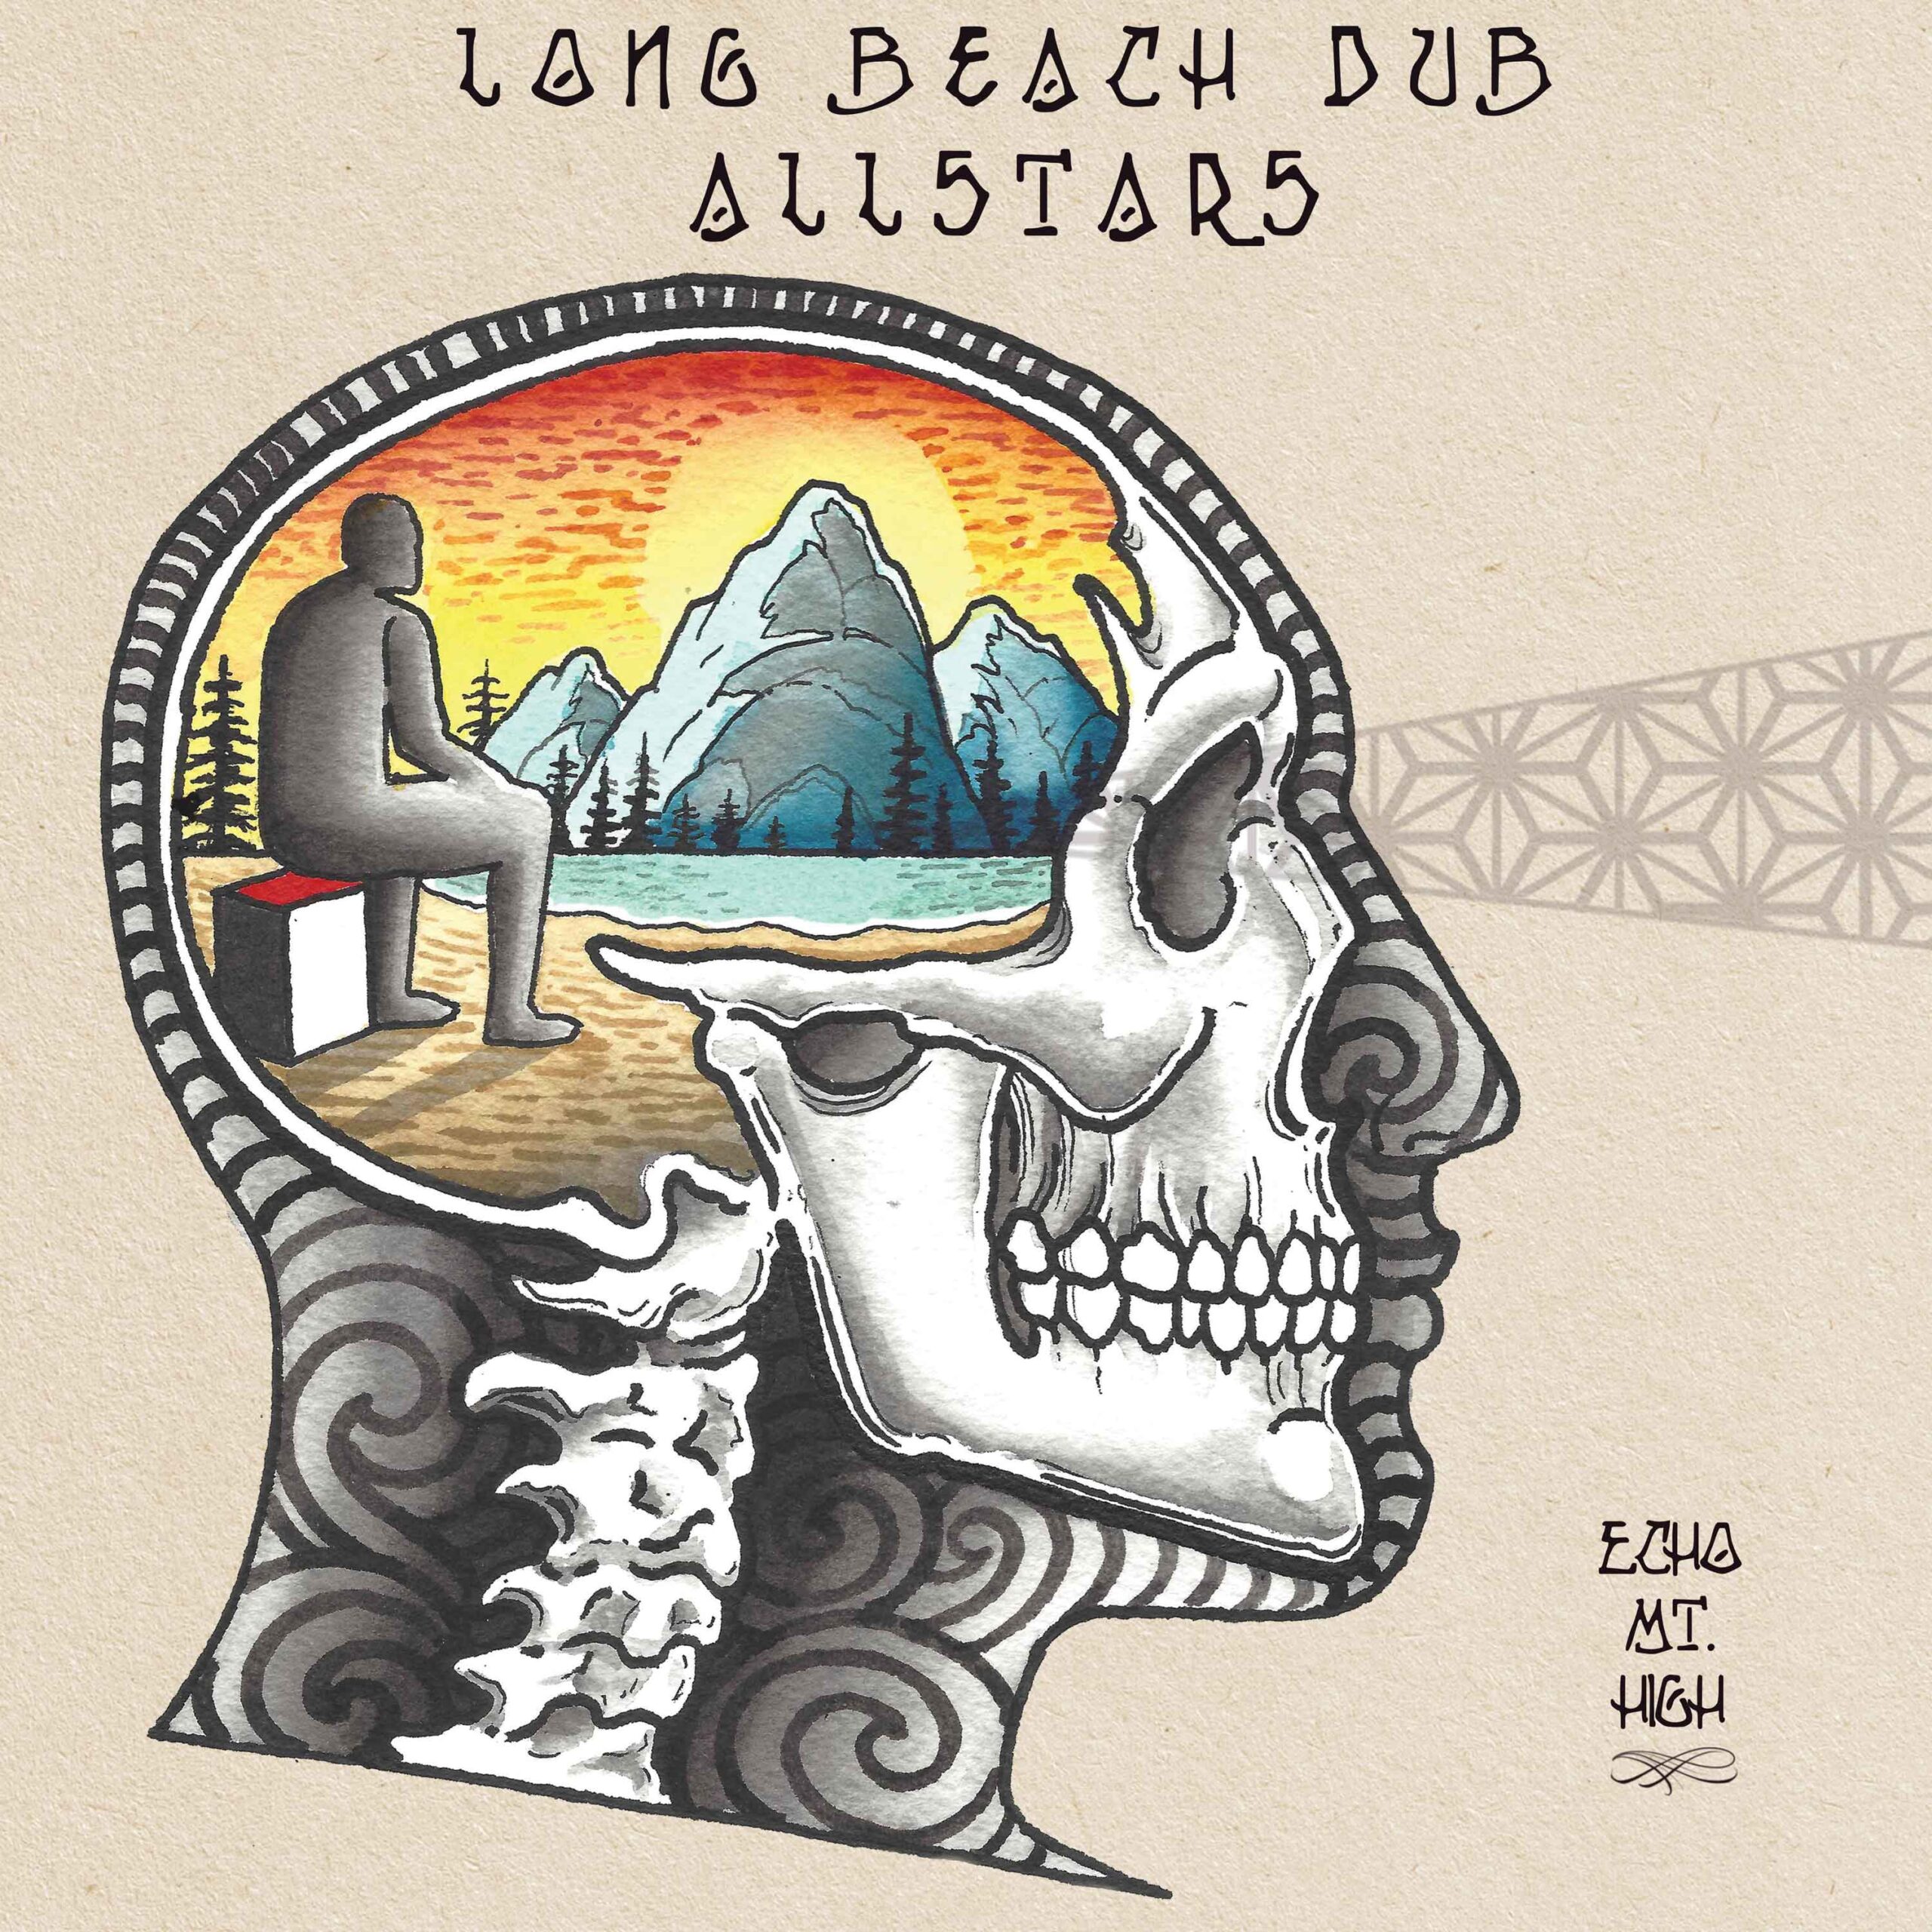 Long Beach Dub Allstars Release New Album "Echo Mountain High" & Video